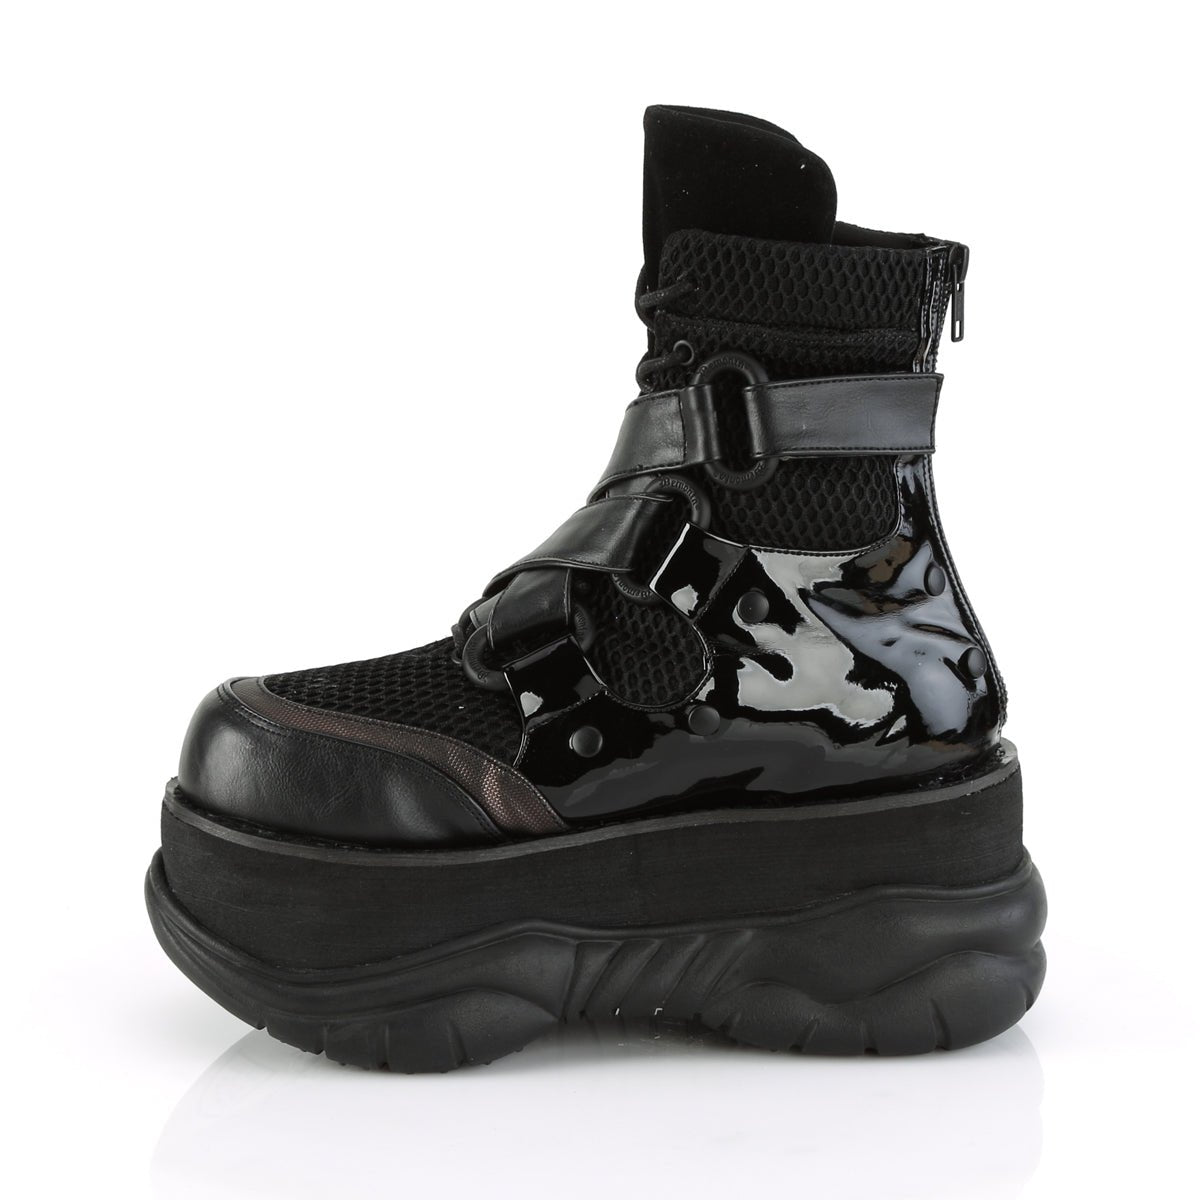 Too Fast | Demonia Neptune 126 | Black Vegan Leather, Fishnet Fabric & Patent Leather Unisex Platform Boots